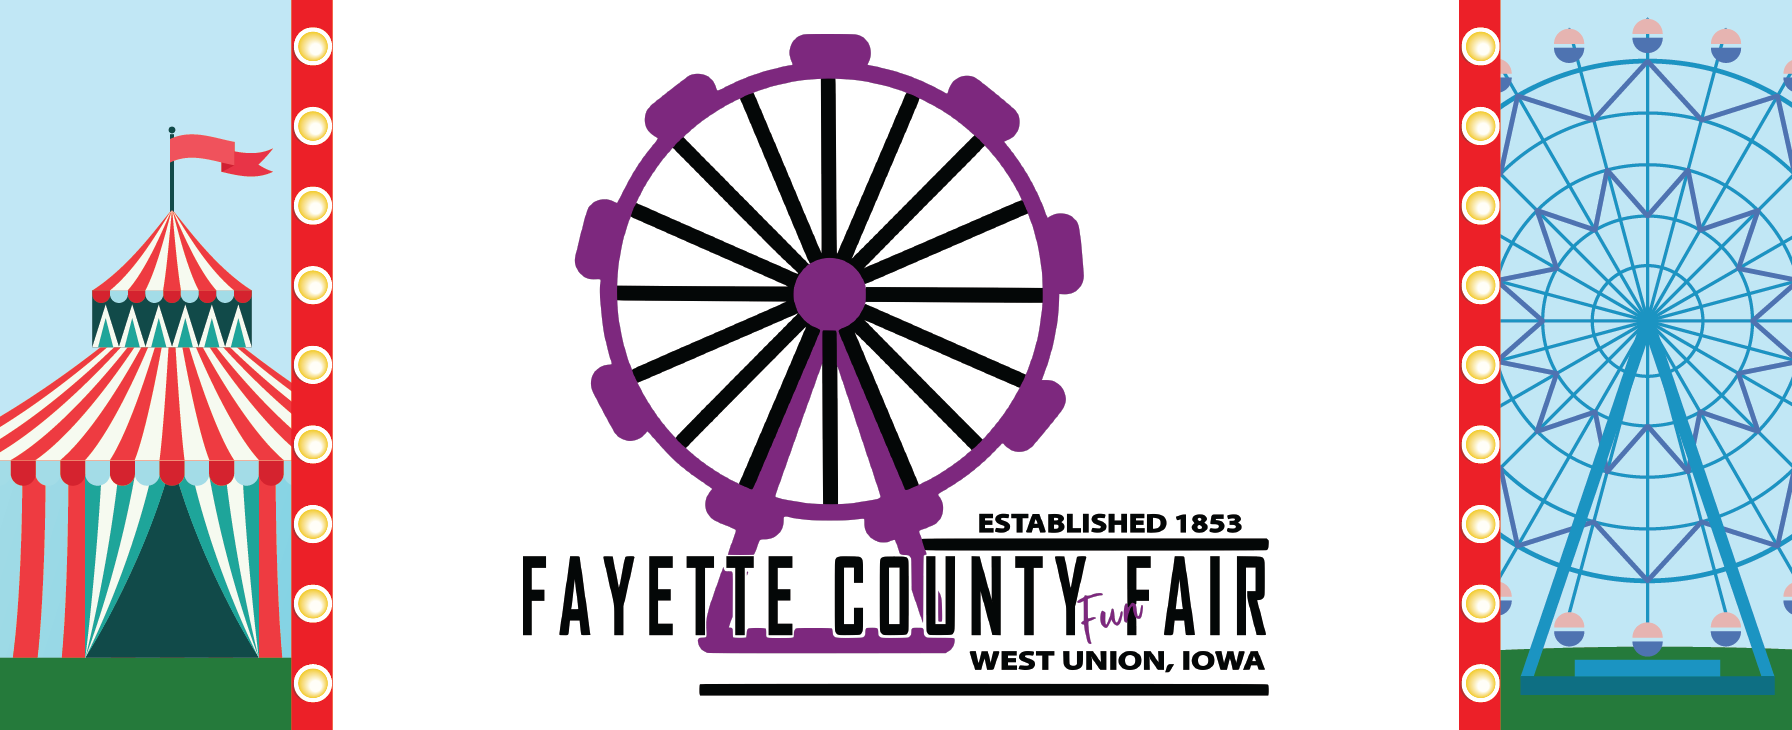 Fayette County Fair logo